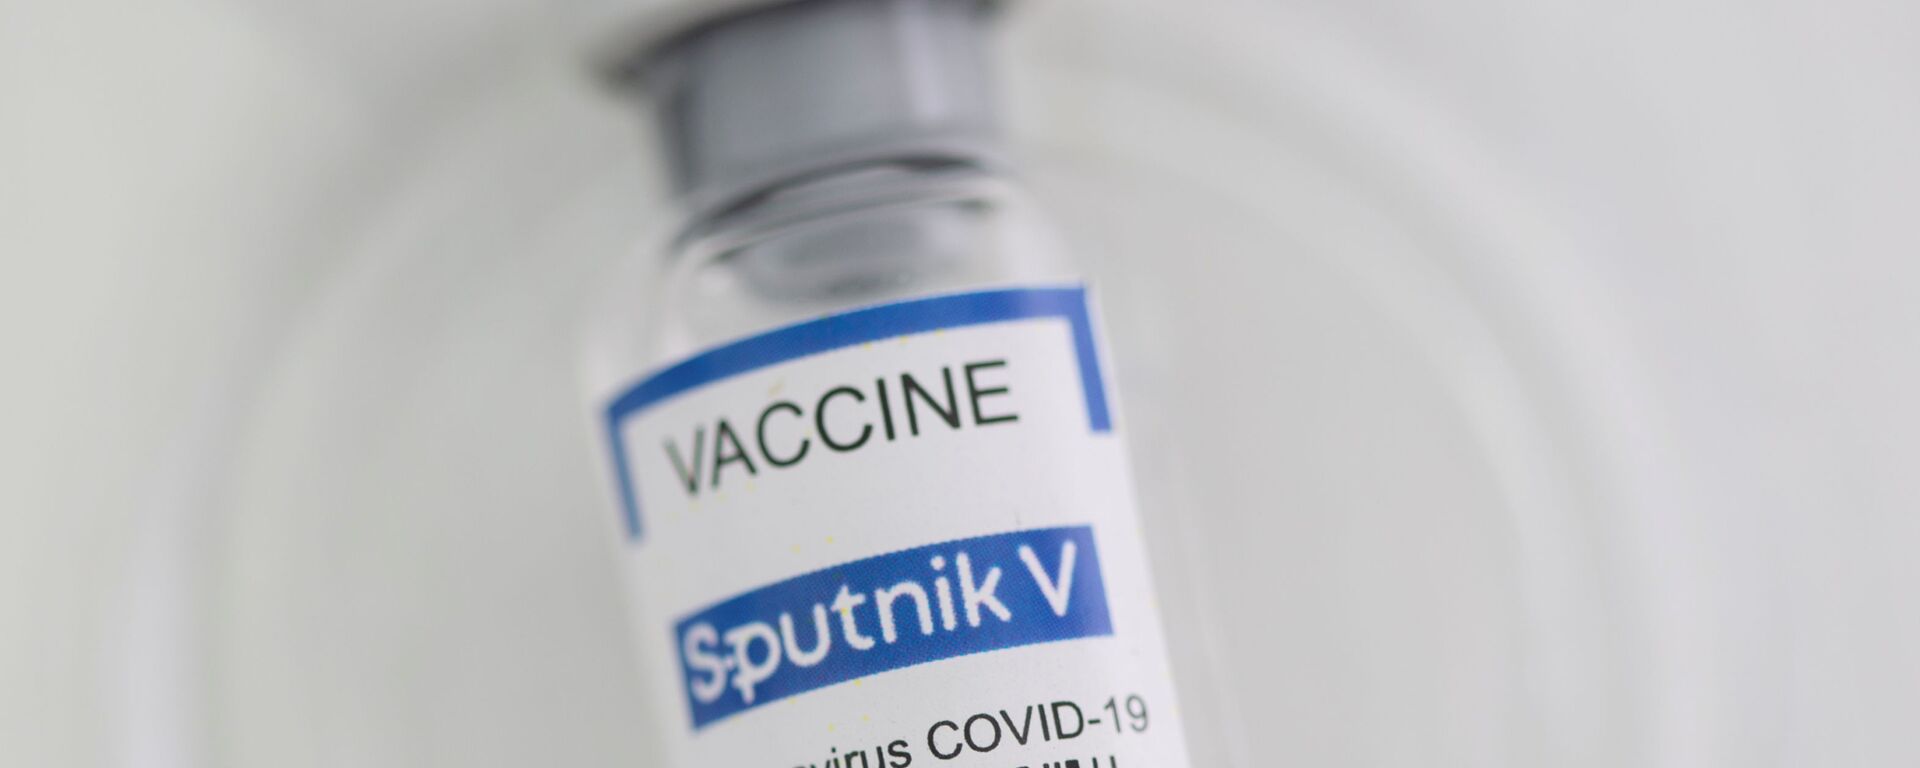 A vial labelled Sputnik V coronavirus disease (COVID-19) vaccine is seen in this illustration picture taken on 2 May 2021. - Sputnik International, 1920, 12.10.2021